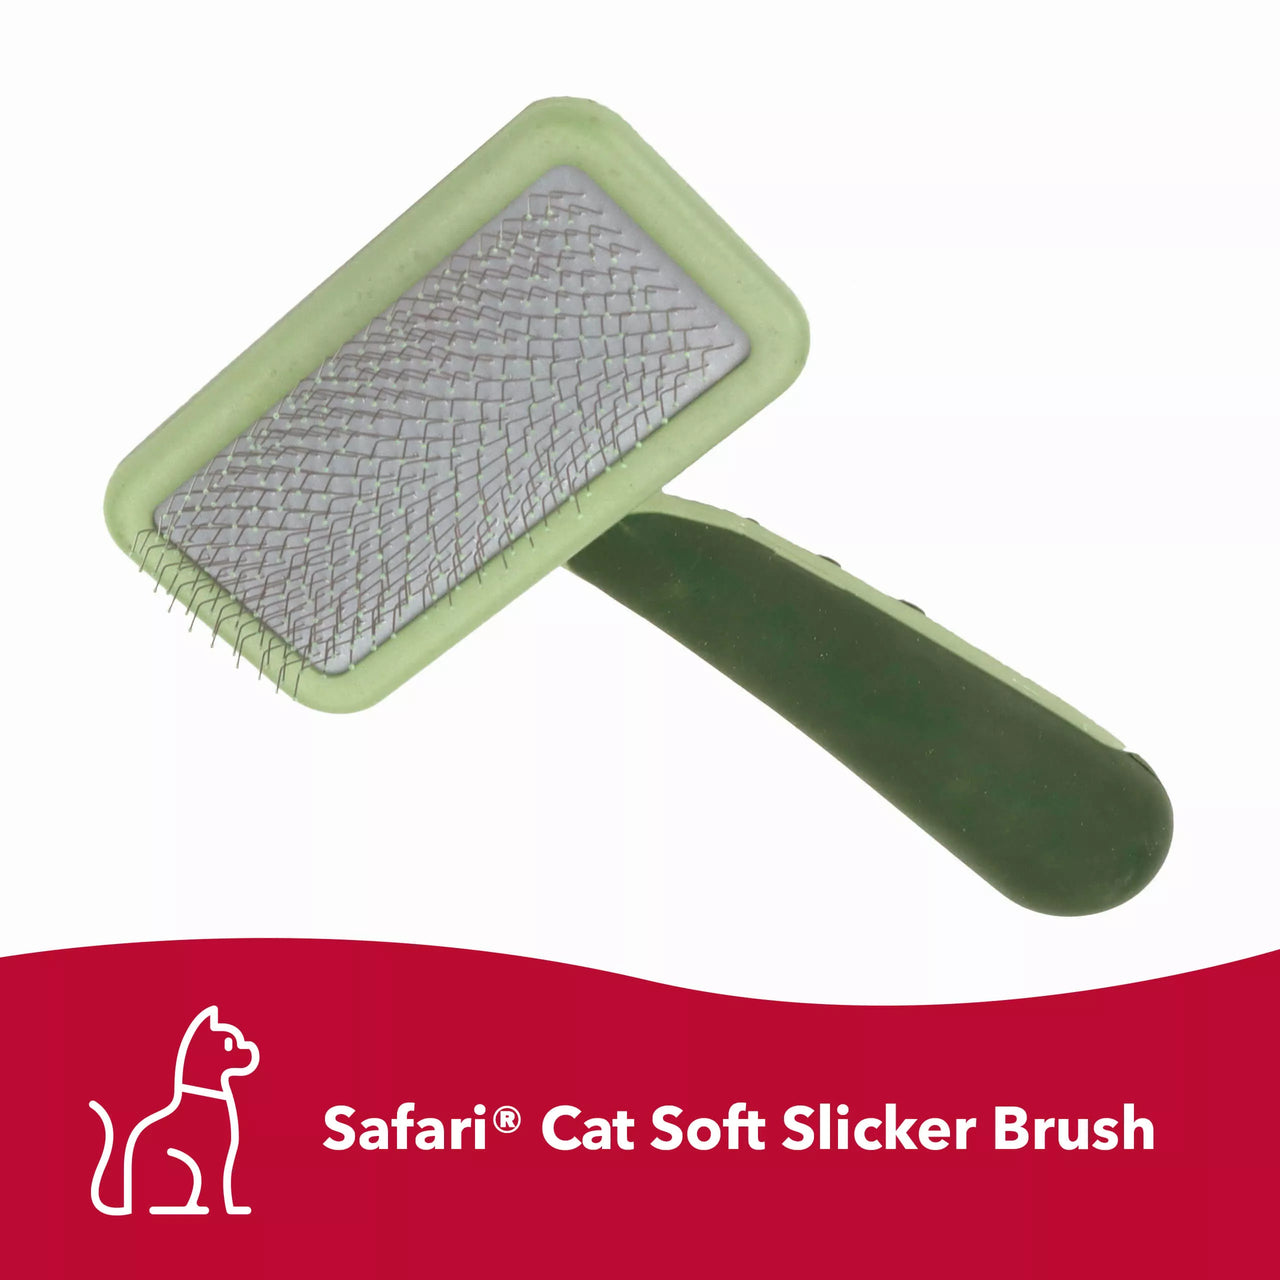 Safari® Cat Soft Slicker Brush